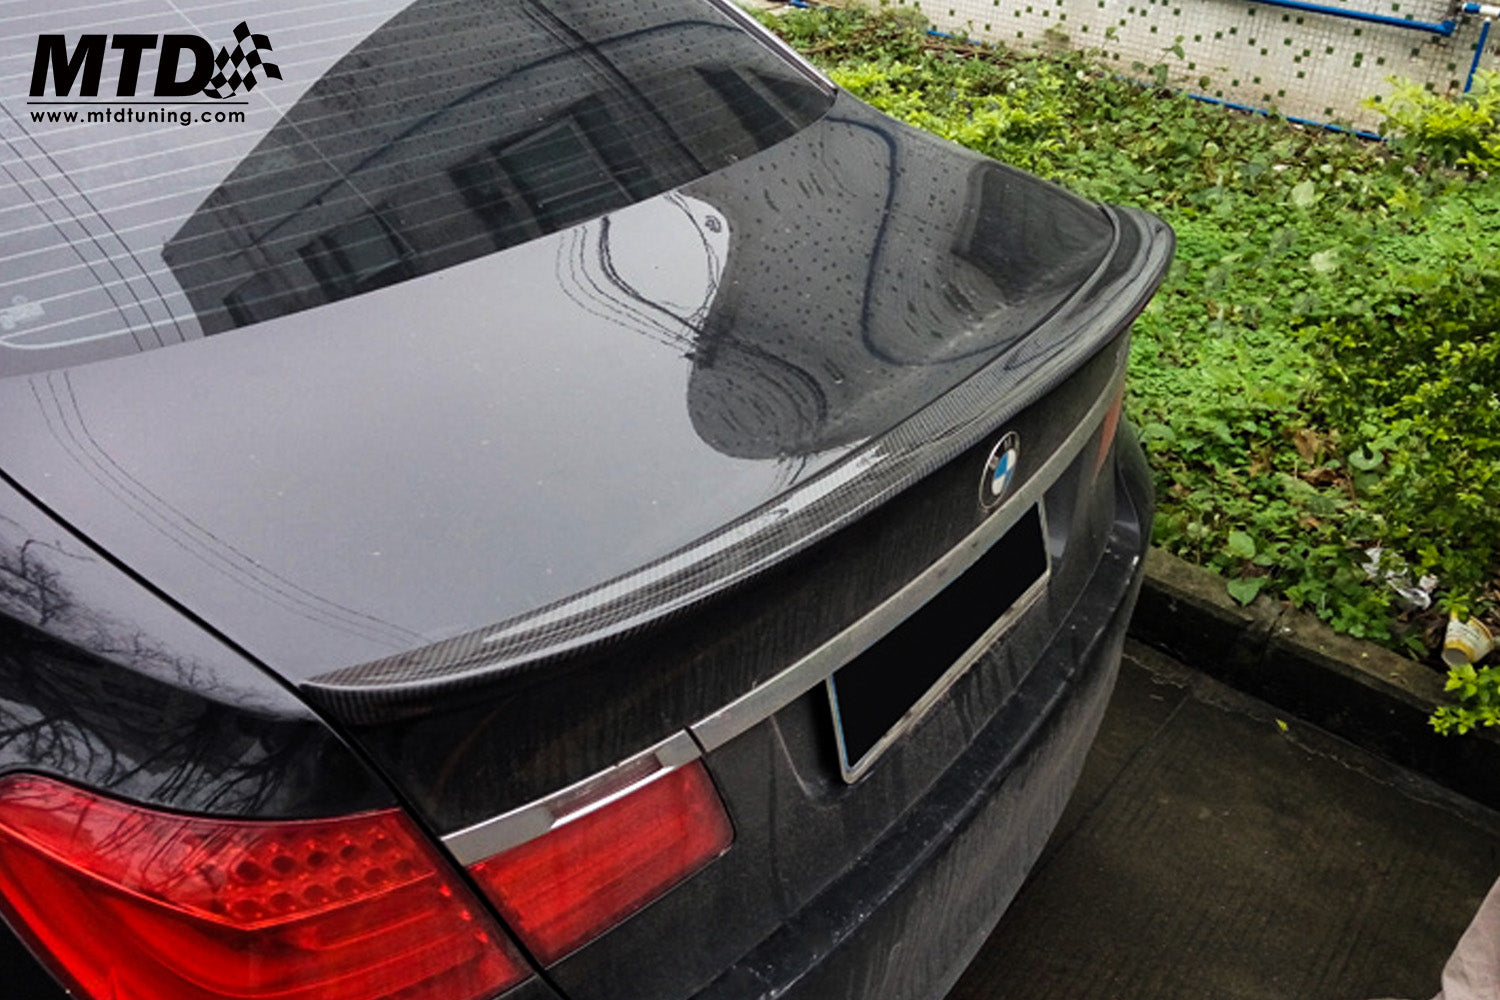 BMW 7 Series With MTD Carbon Fiber Spoiler(AC)